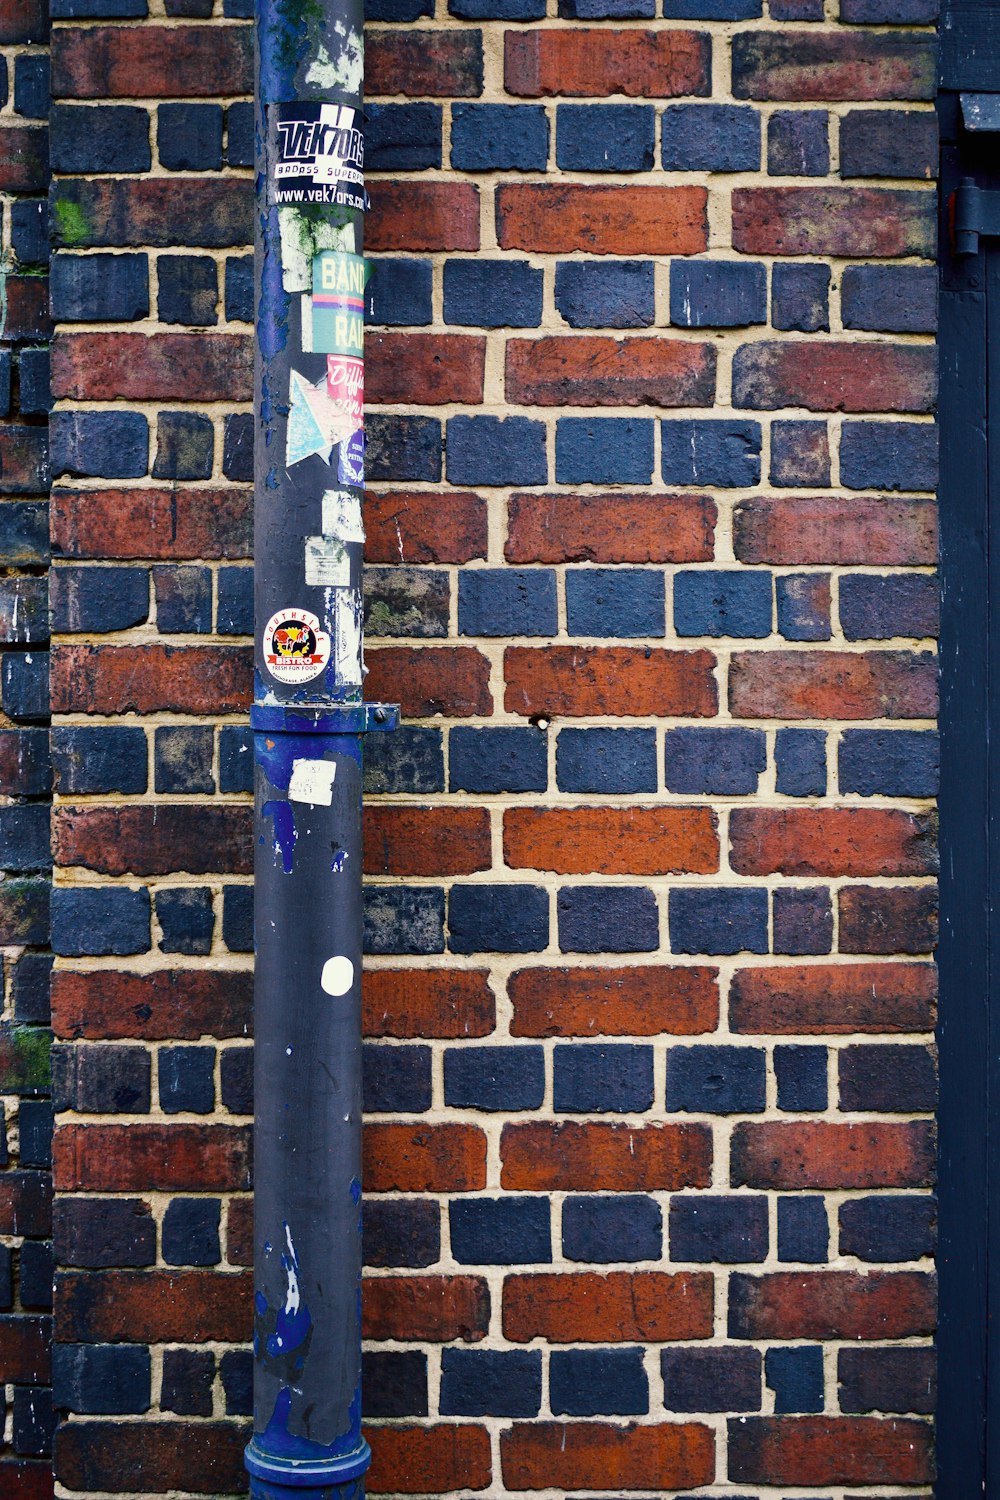 a baseball bat leaning against a brick wall